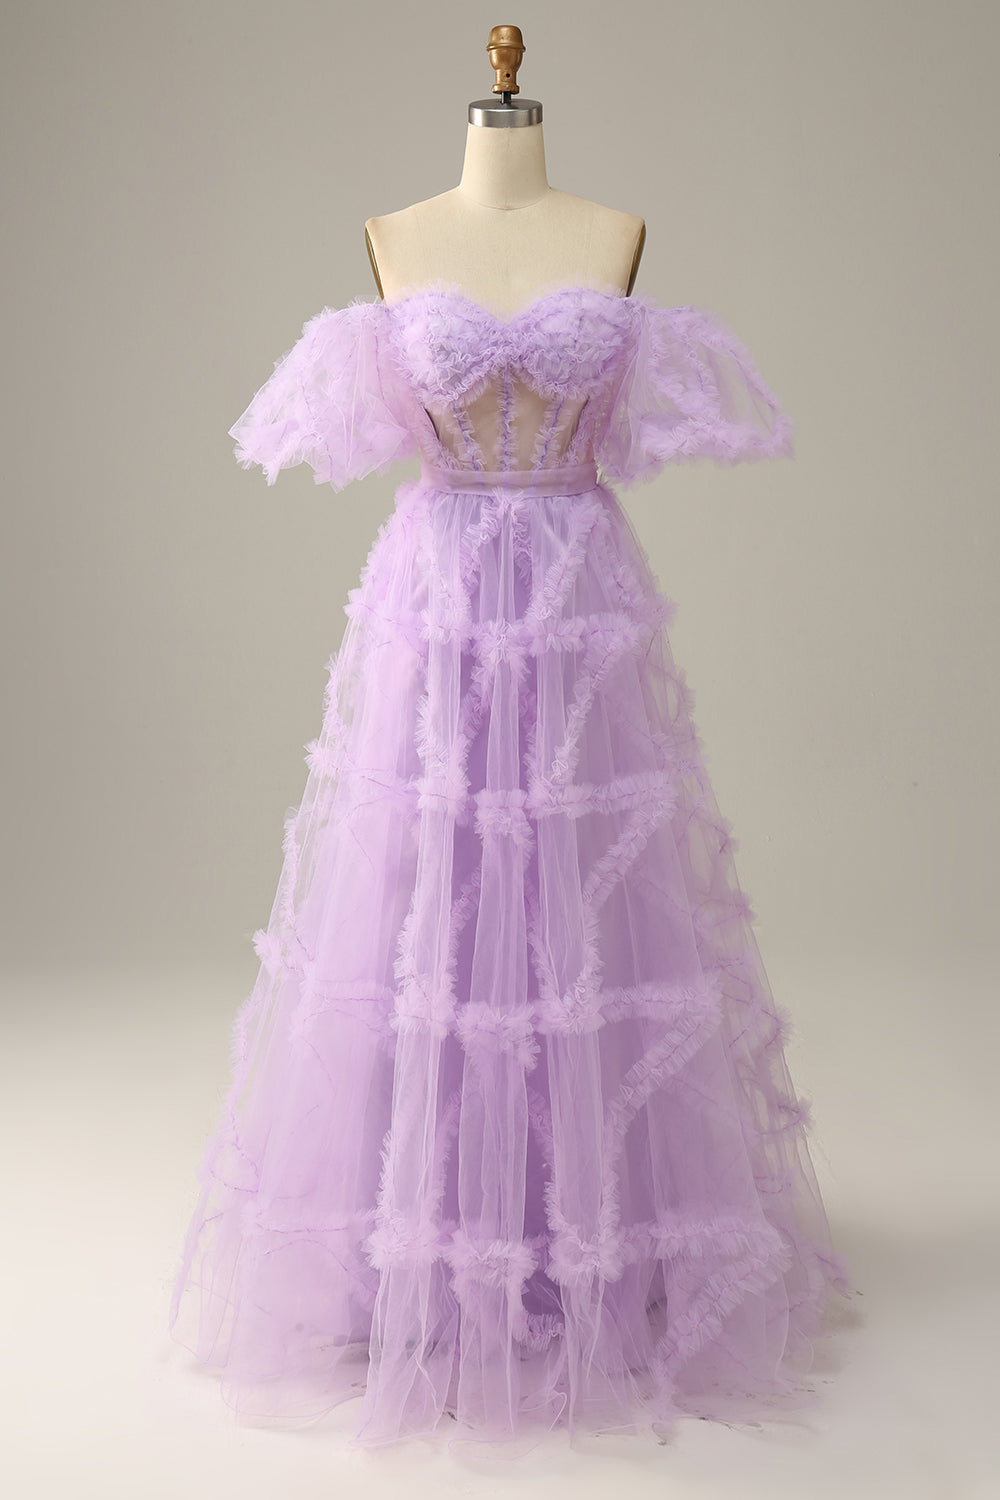 Fairytale Lavendere Off the Shoulder Princess Gown